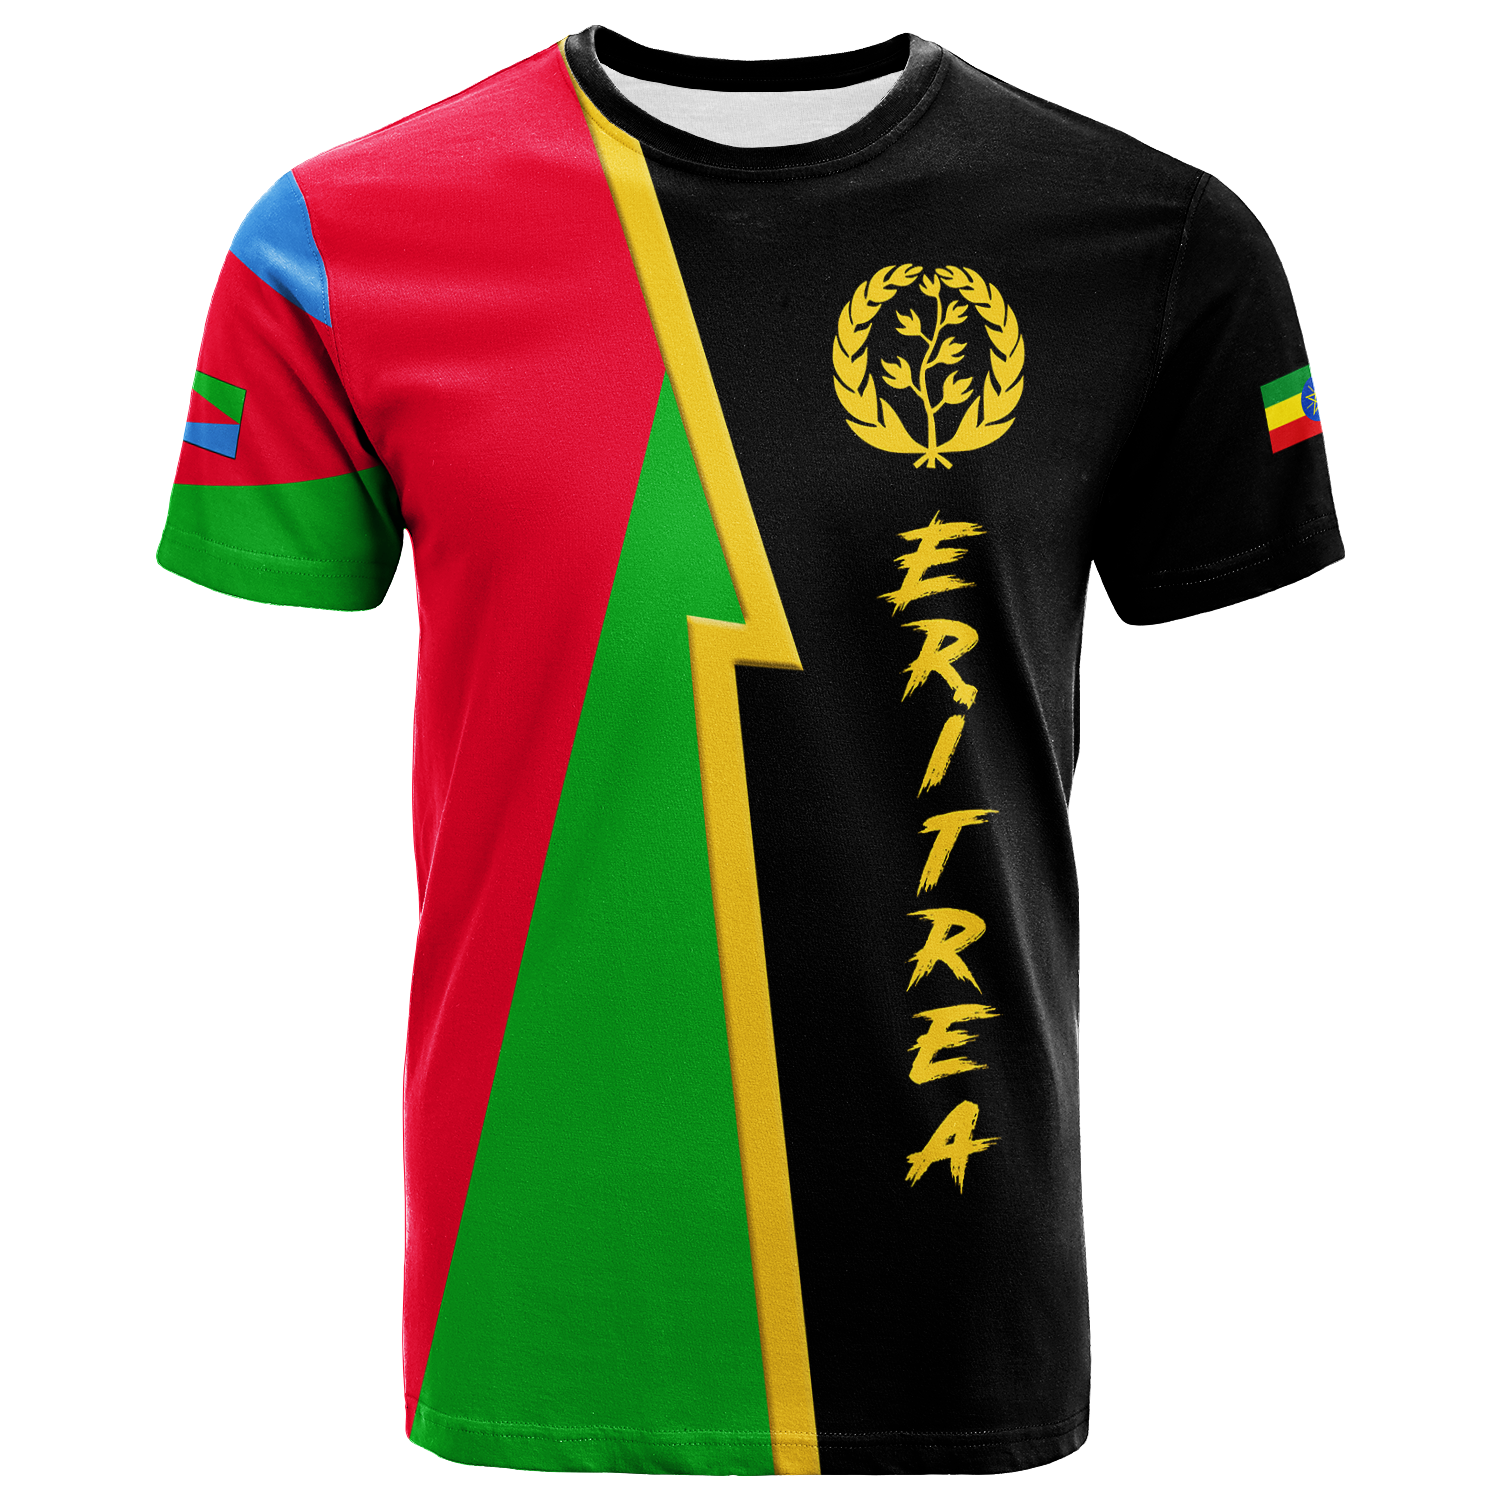 eritrea-combine-ethiopia-flag-legend-t-shirt